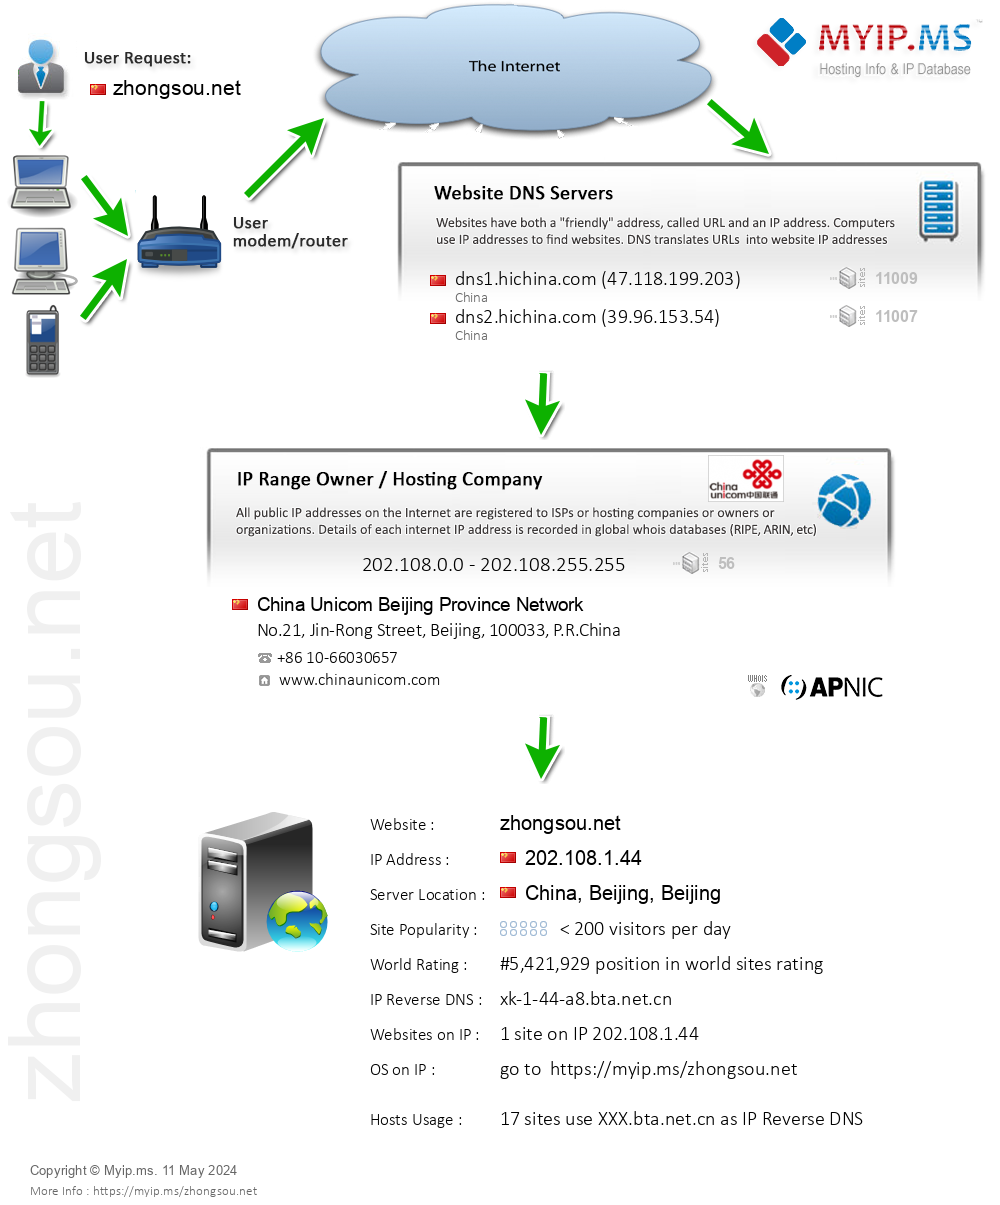 Zhongsou.net - Website Hosting Visual IP Diagram